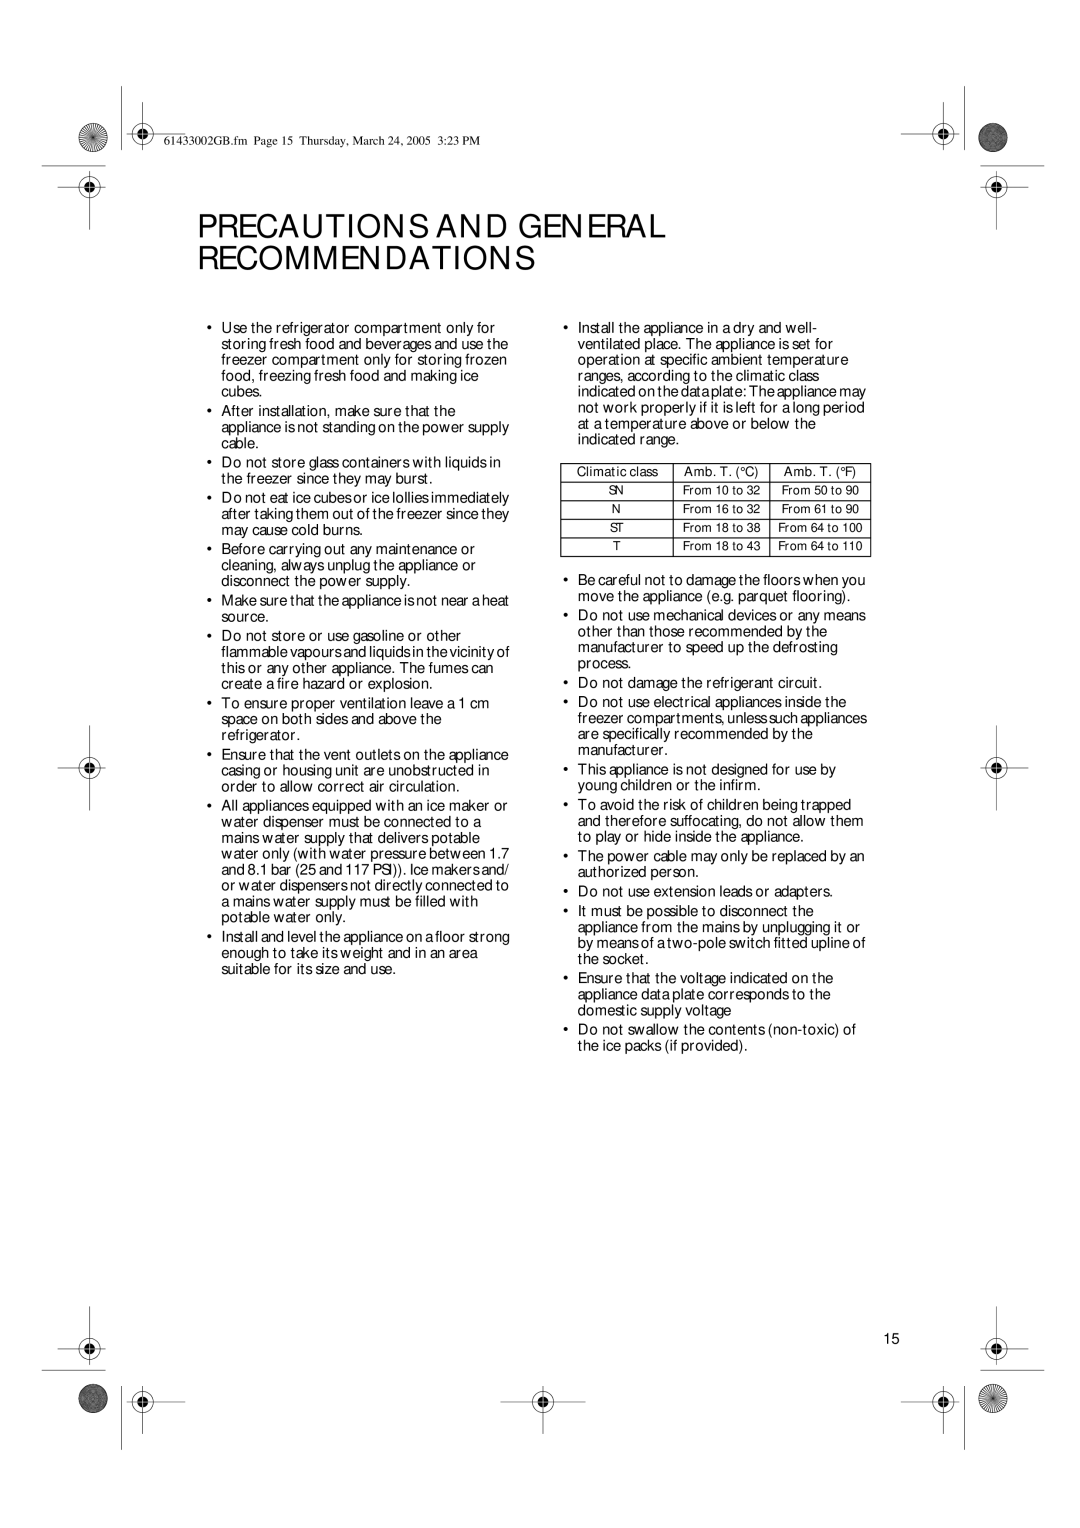 CDA FW480 manual Precautions And General Recommendations 